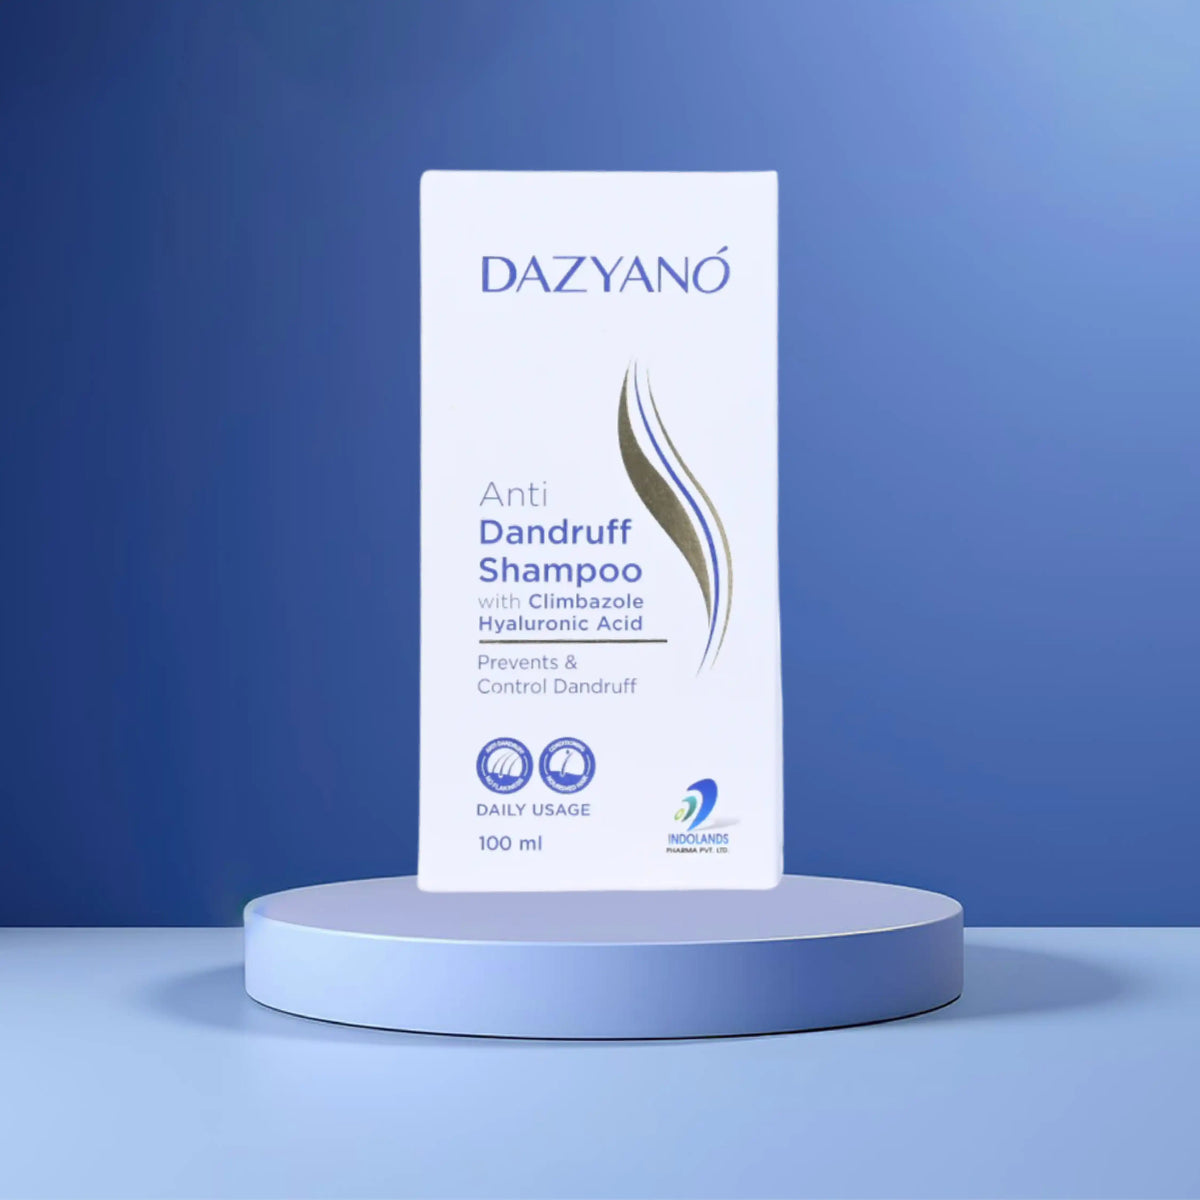 Dazyano anti dandruff shampoo